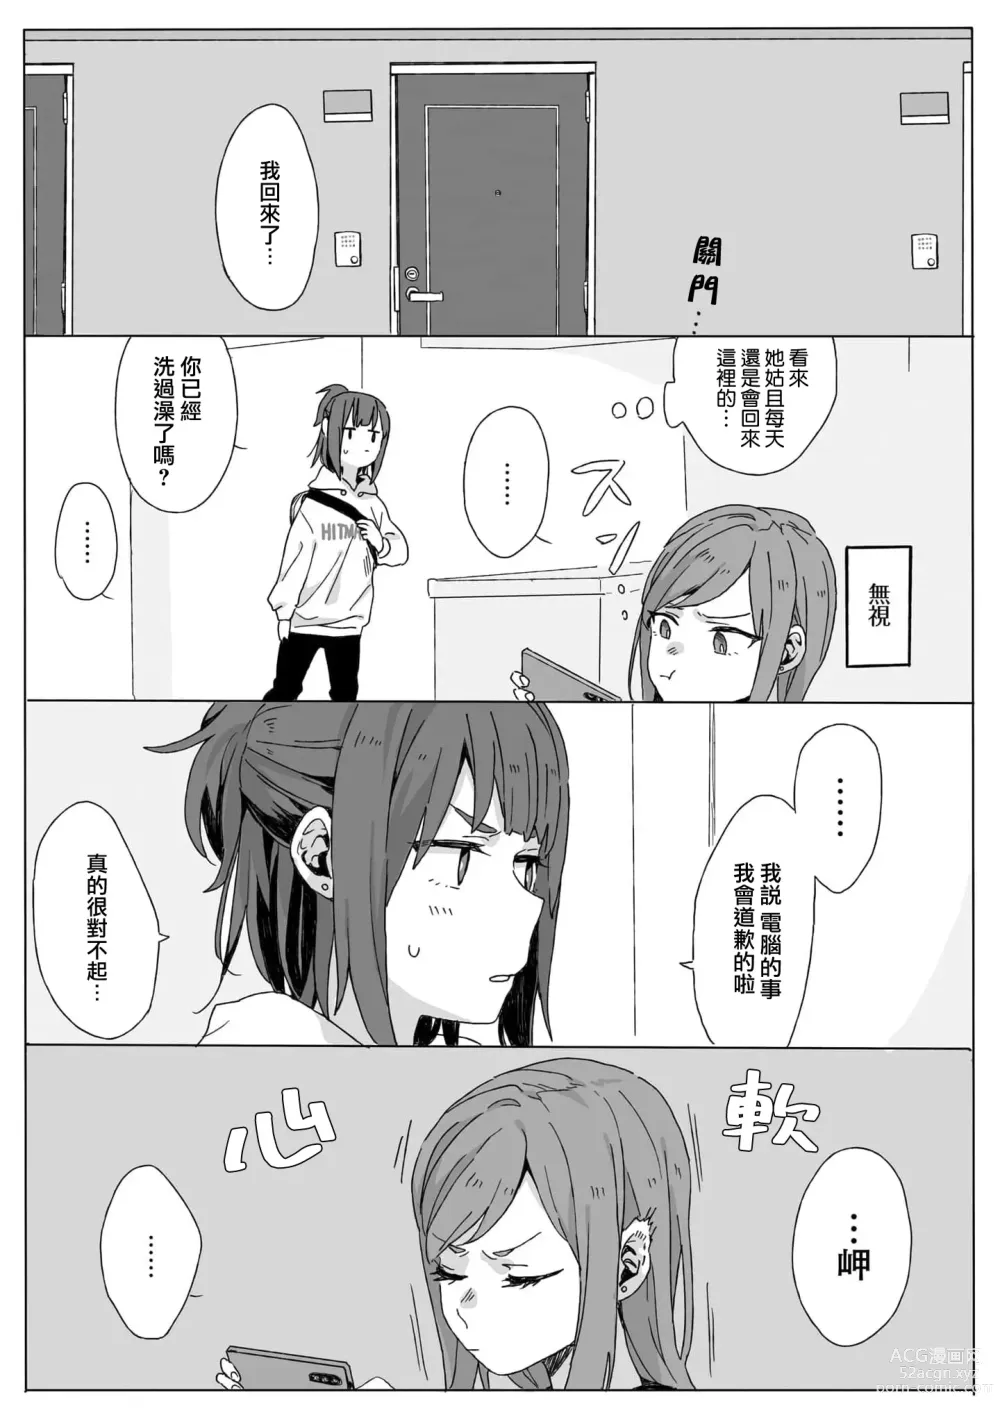 Page 7 of manga 山内小姐和海野小姐的回合。